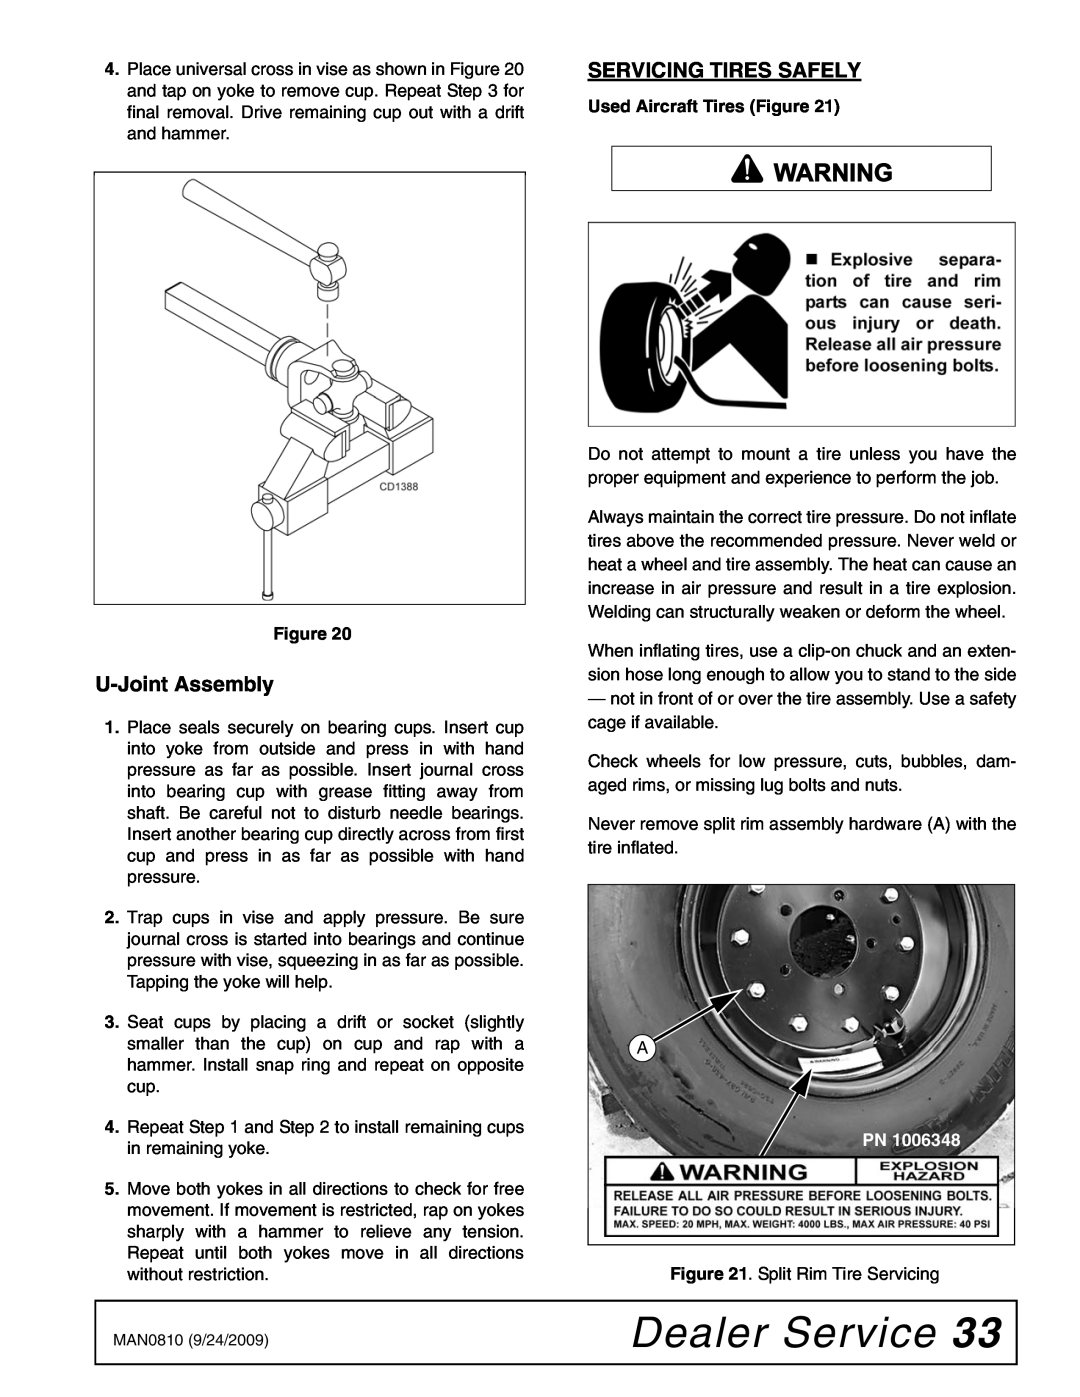 Woods Equipment BW15LH manual Dealer Service, U-JointAssembly, Servicing Tires Safely 